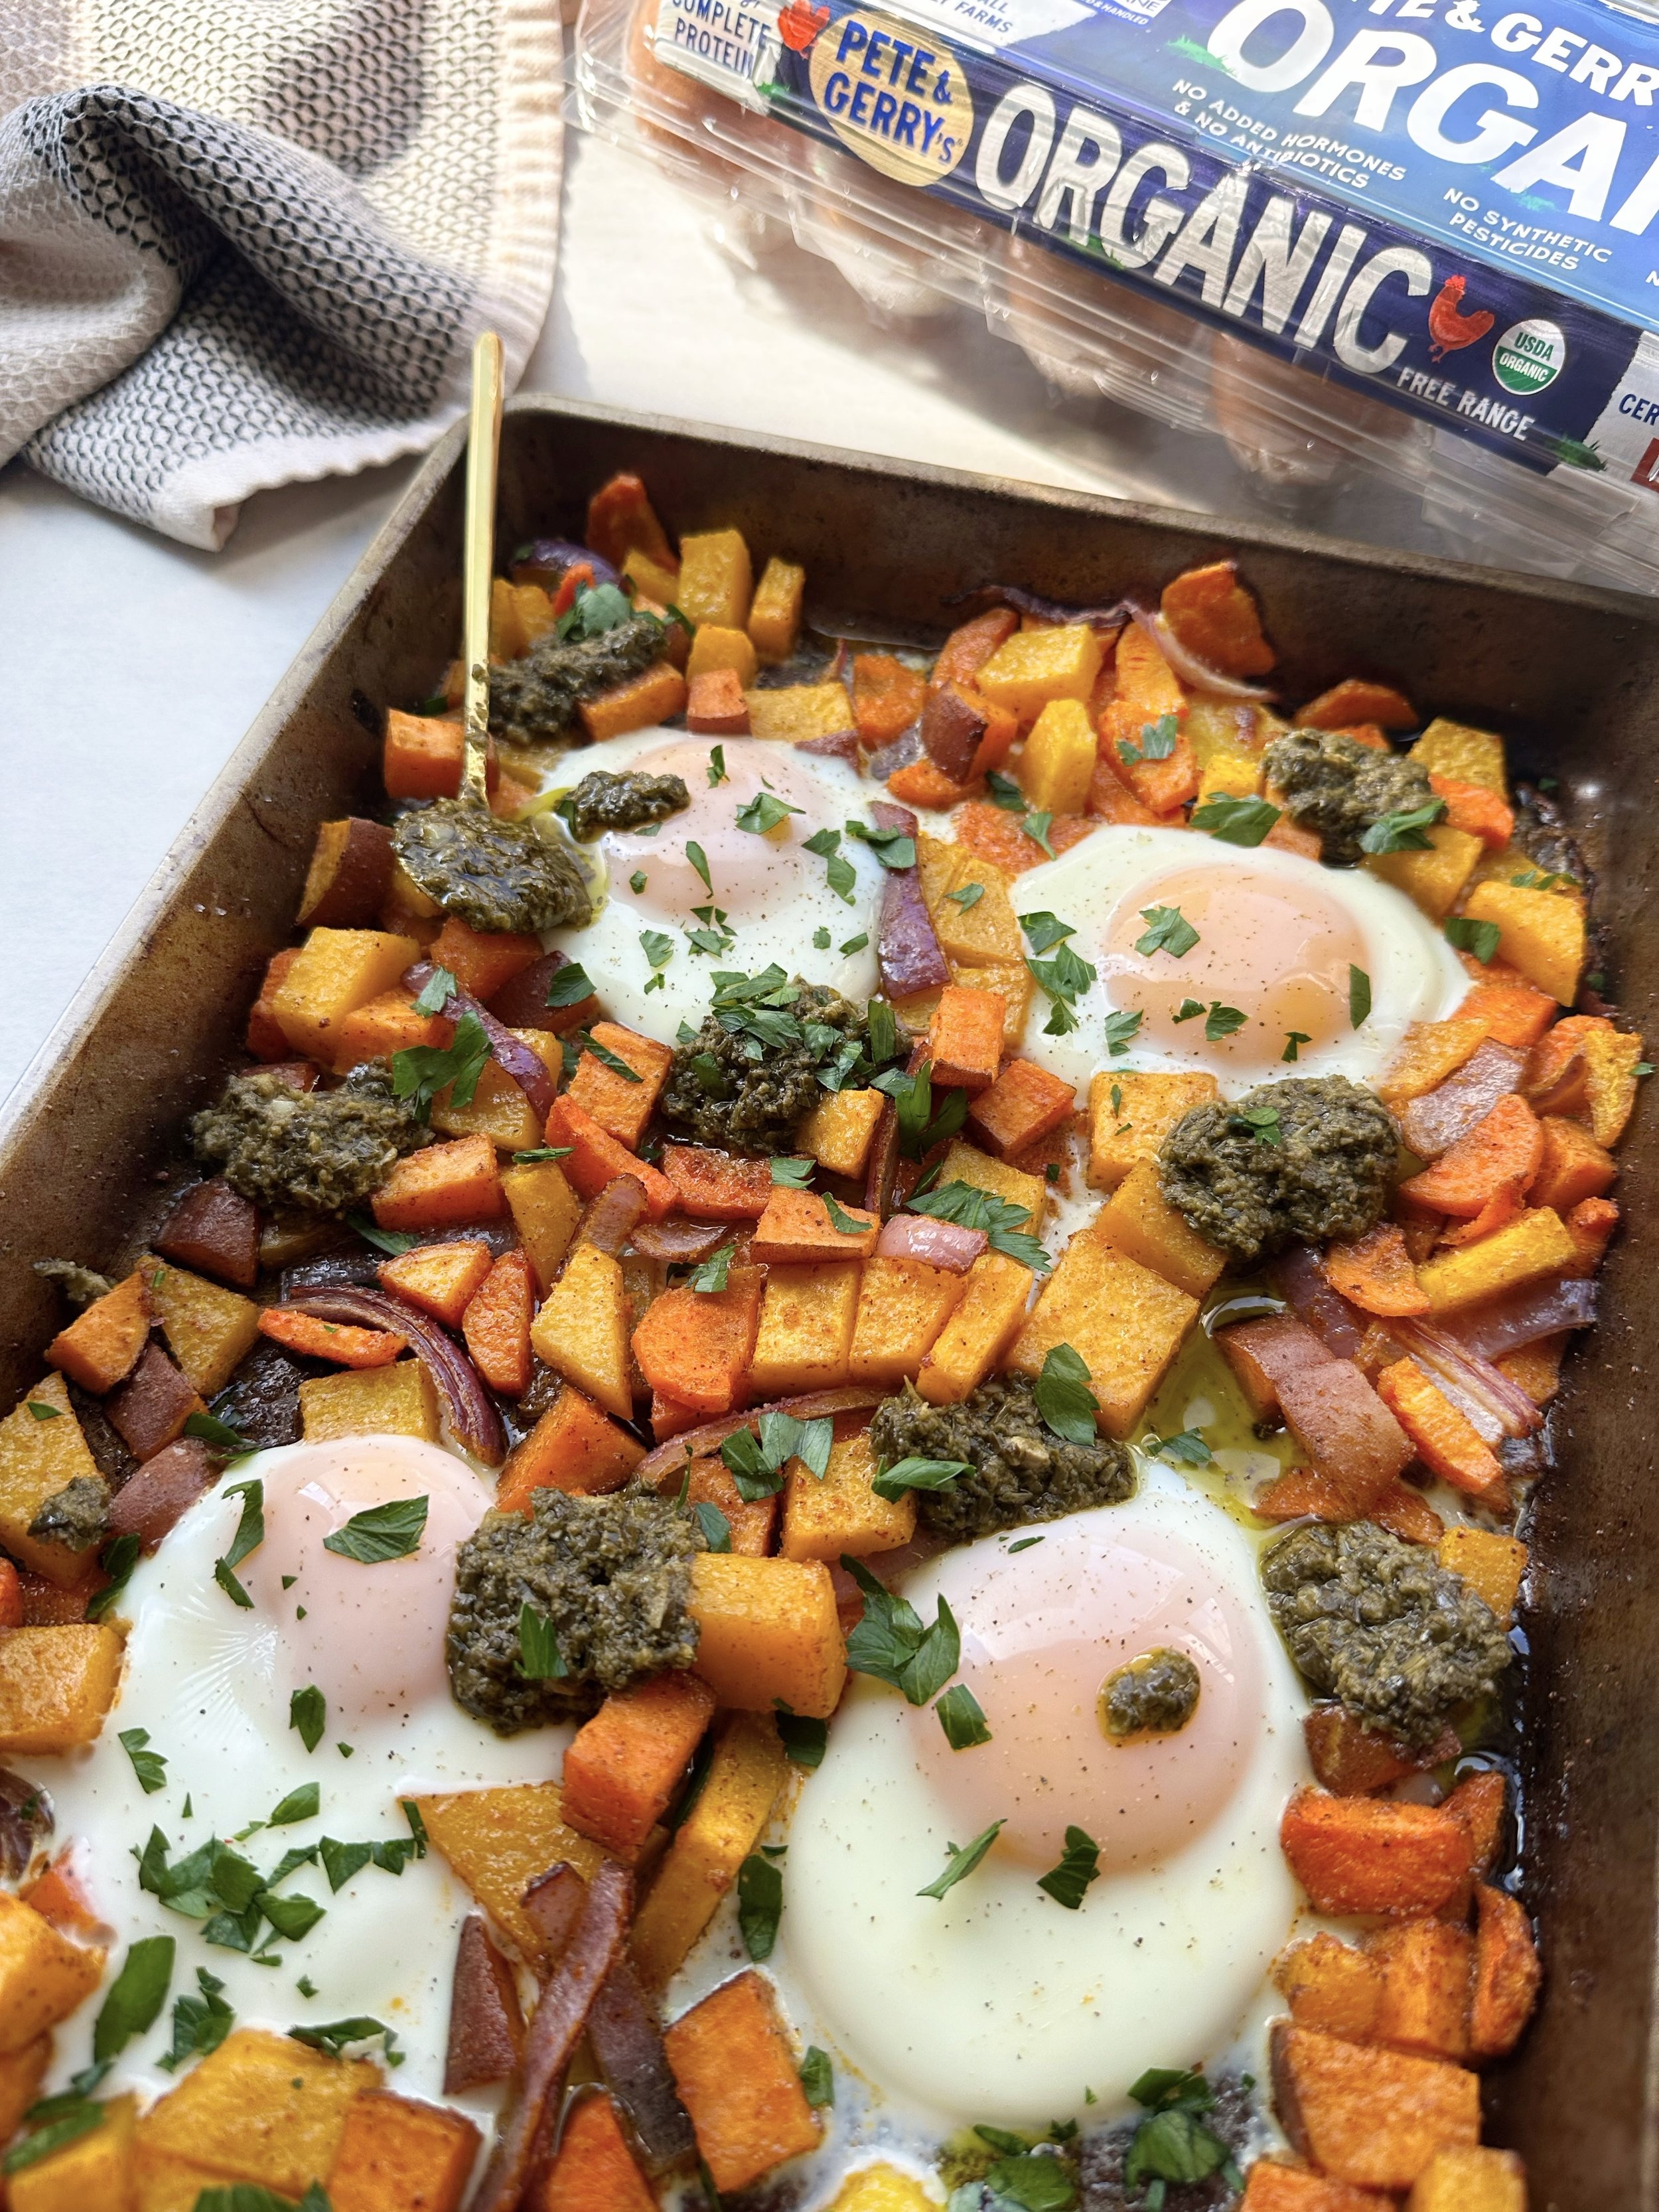 Sheet Pan Eggs and Veggies — Sammi Brondo  NYC based Registered Dietitian  Nutritionist